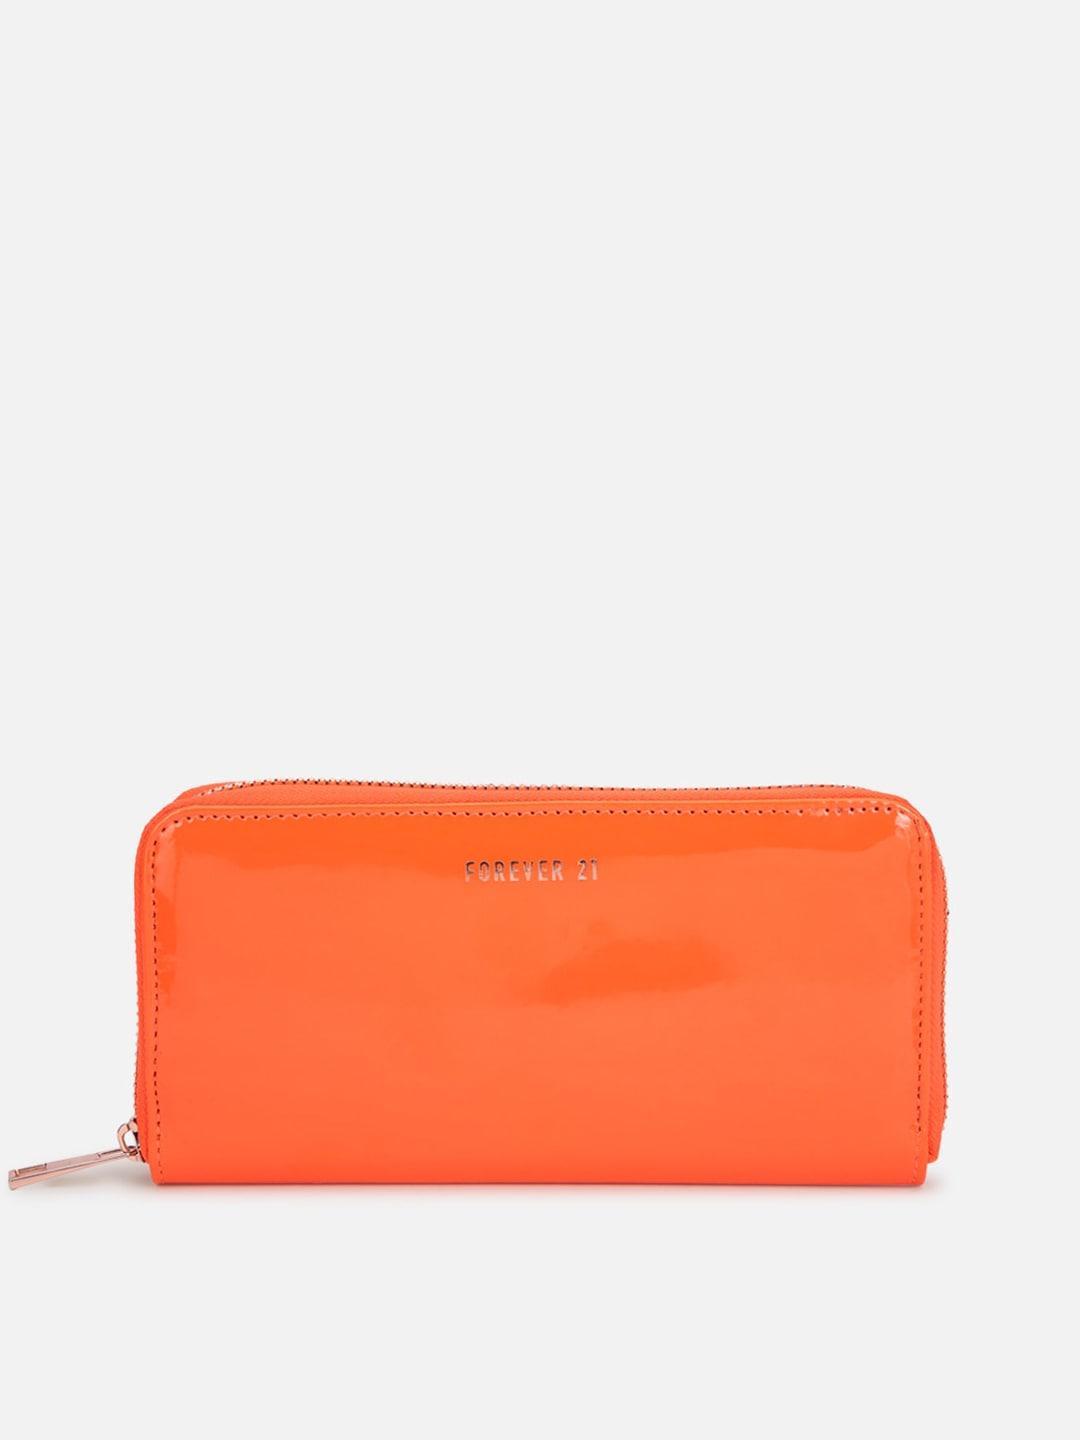 forever-21-women-orange-purse-clutch